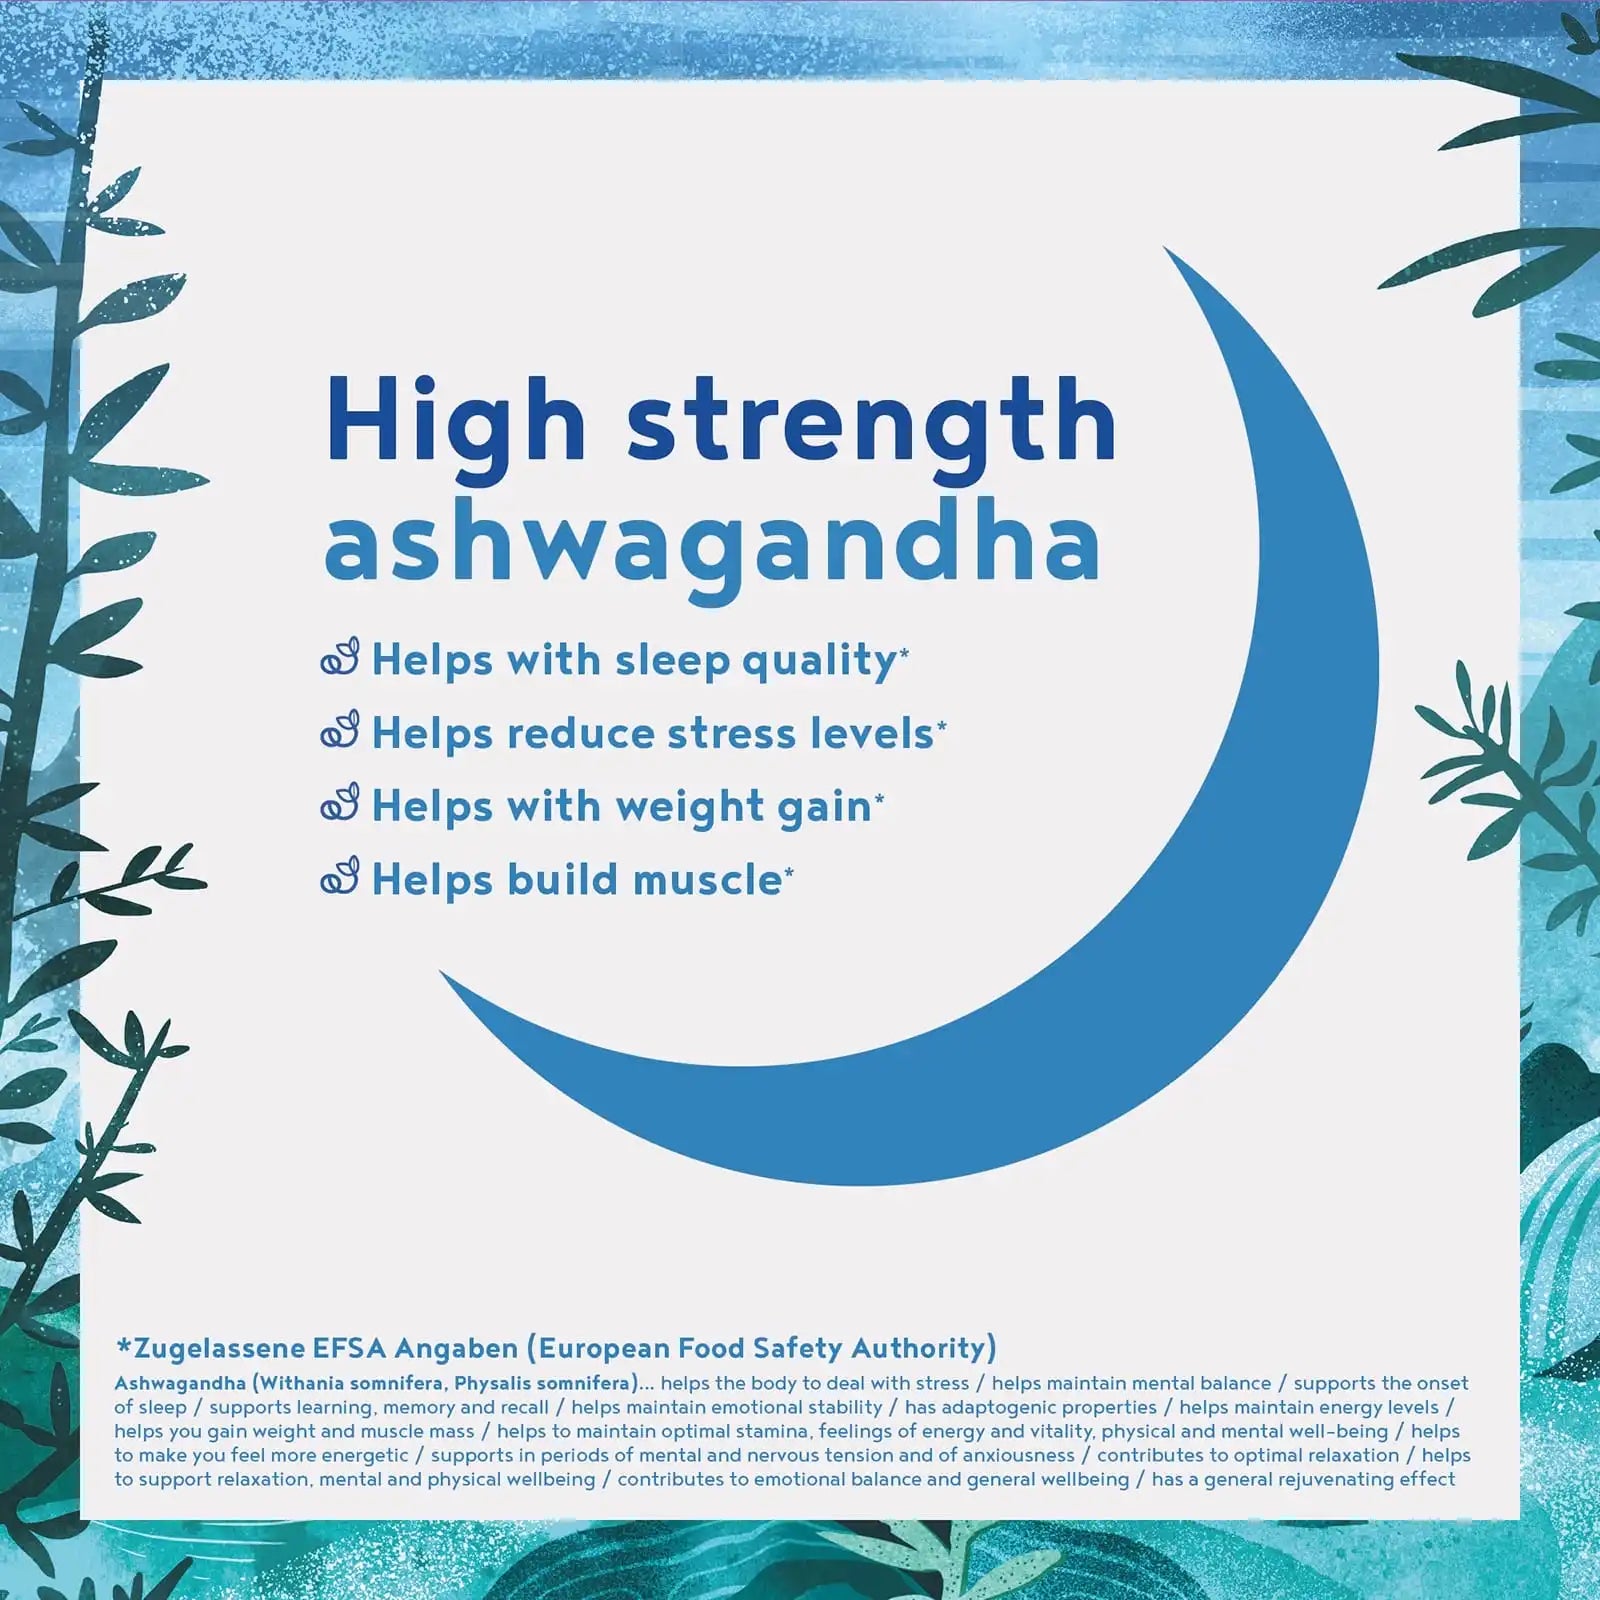 A+ One - High potency Ashwagandha